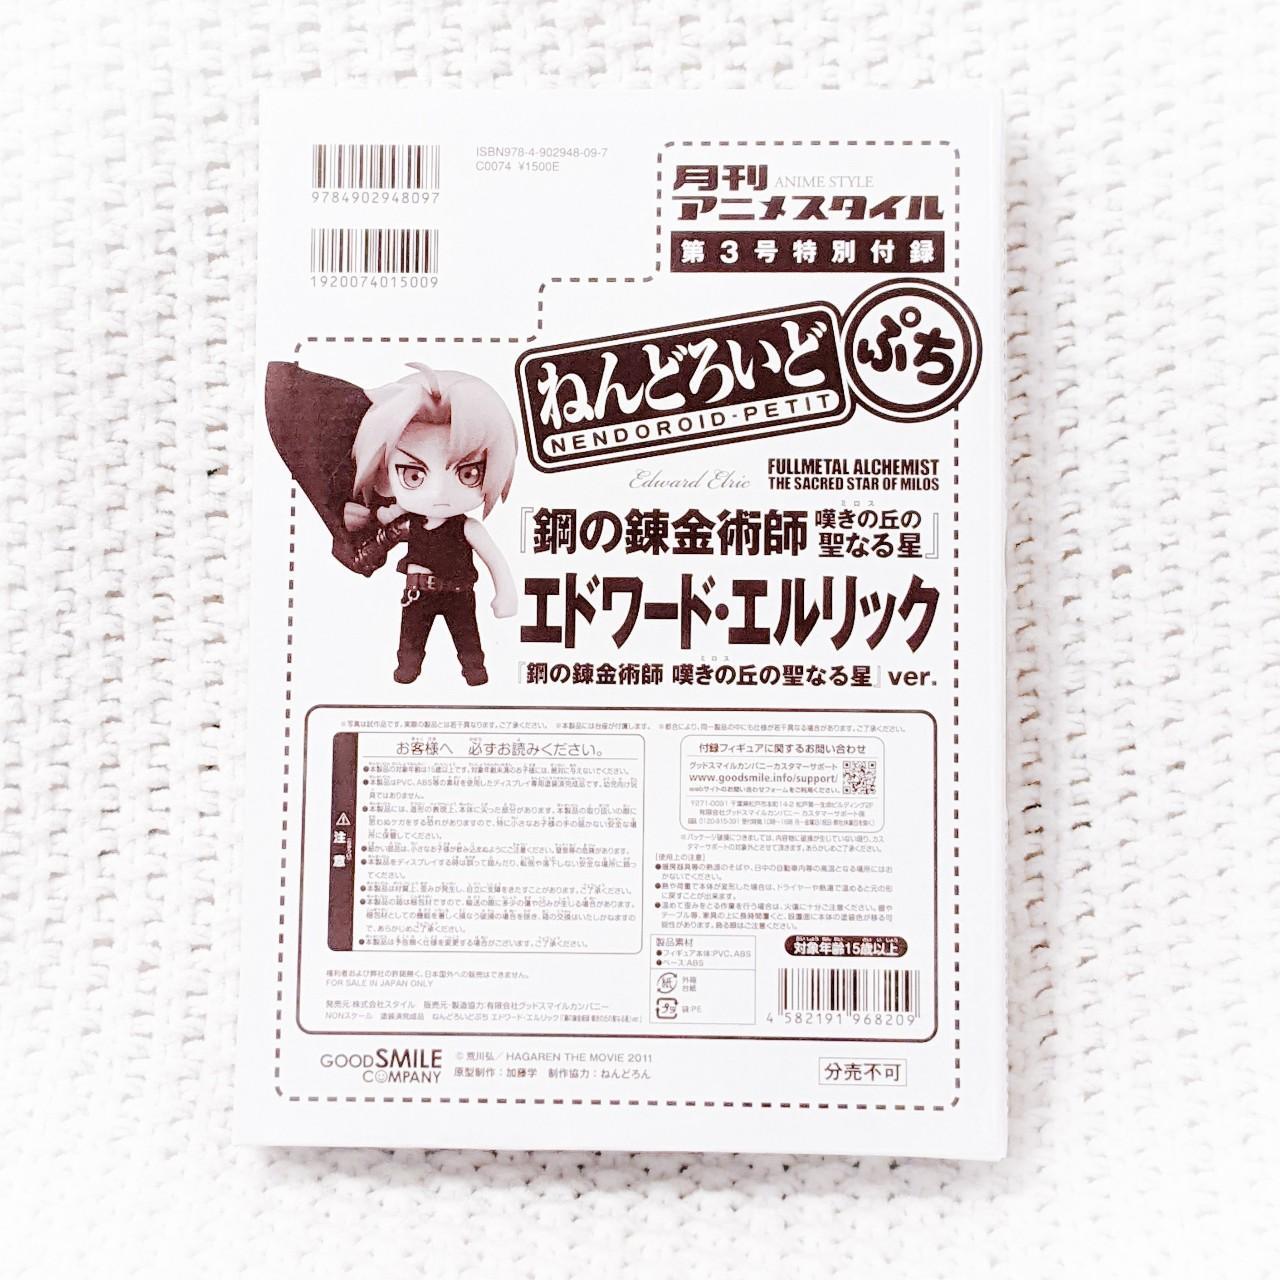 Edward Elric Fullmetal Alchemist Monthly Anime Style Nendoroid Petite Figure